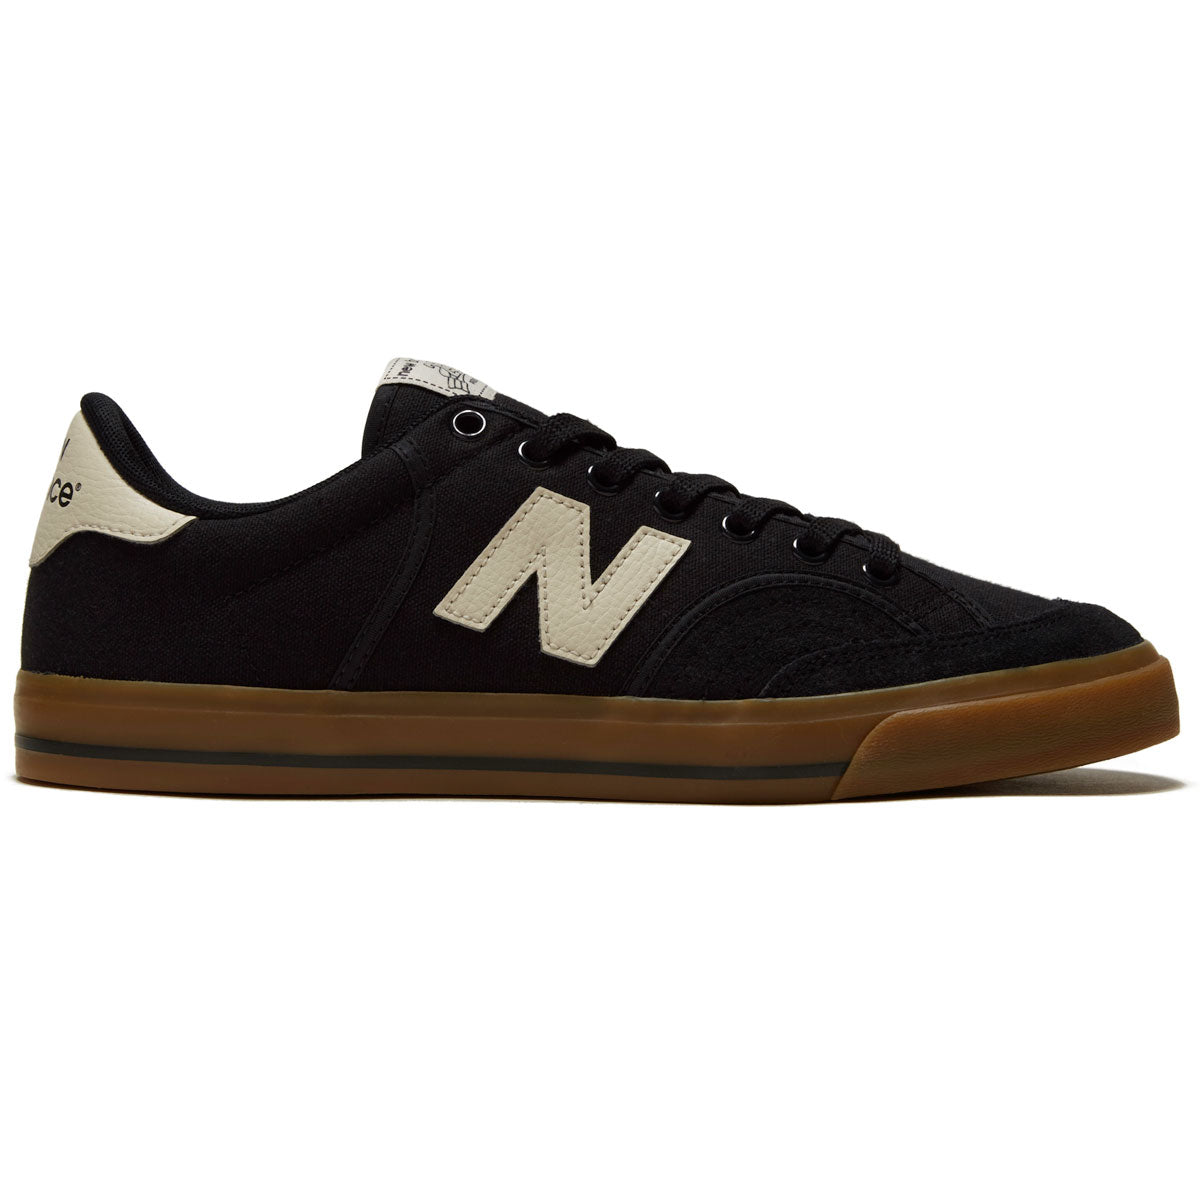 New Balance 212 Shoes - Black/Gum image 1